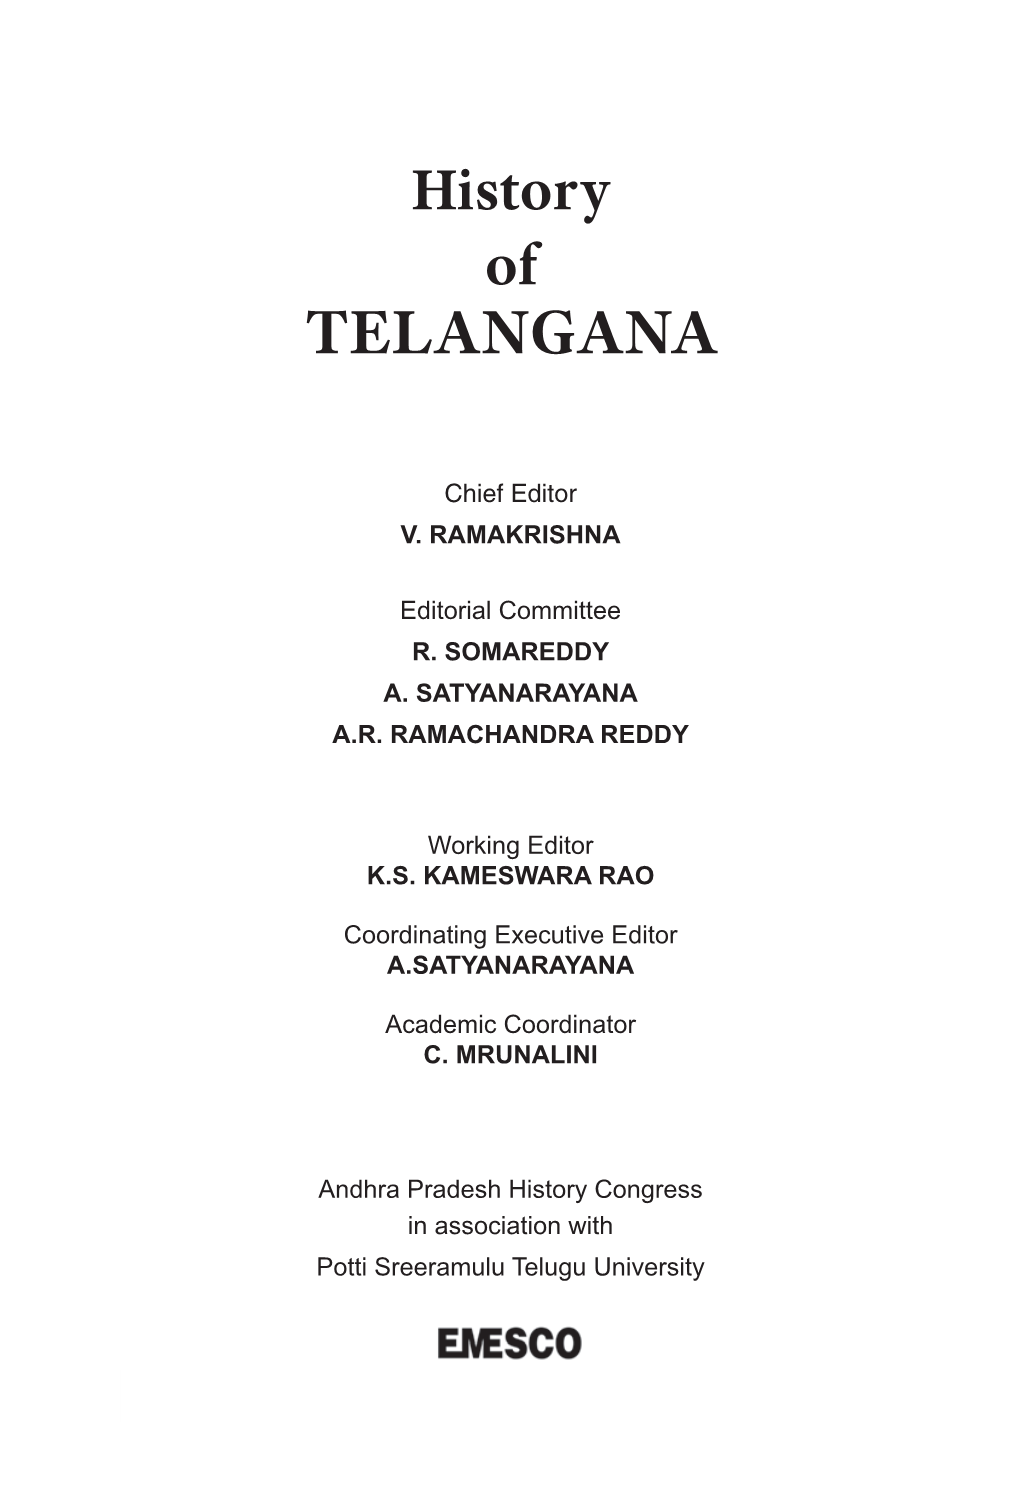 History of Telangana